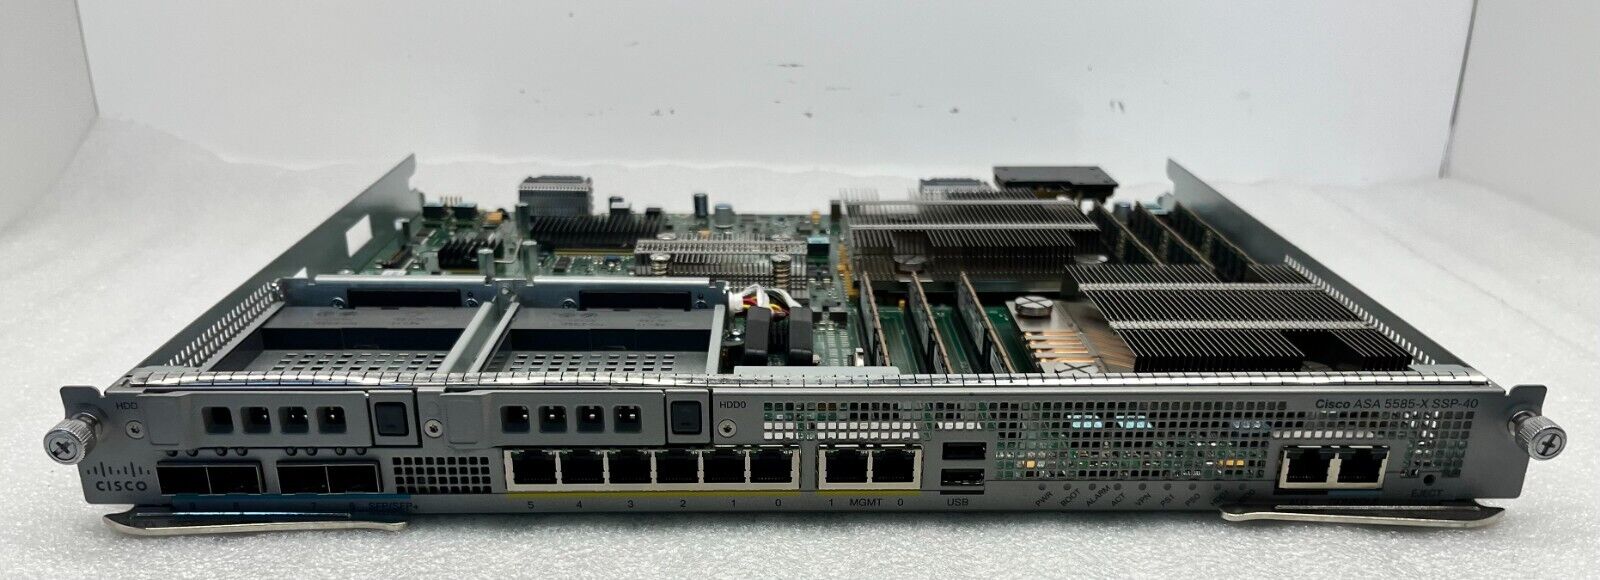 CISCO ASA 5585-X IPS SSP-40 4-SFP PORTS 12GB RAM SECURITY APPLIANCE MODULE